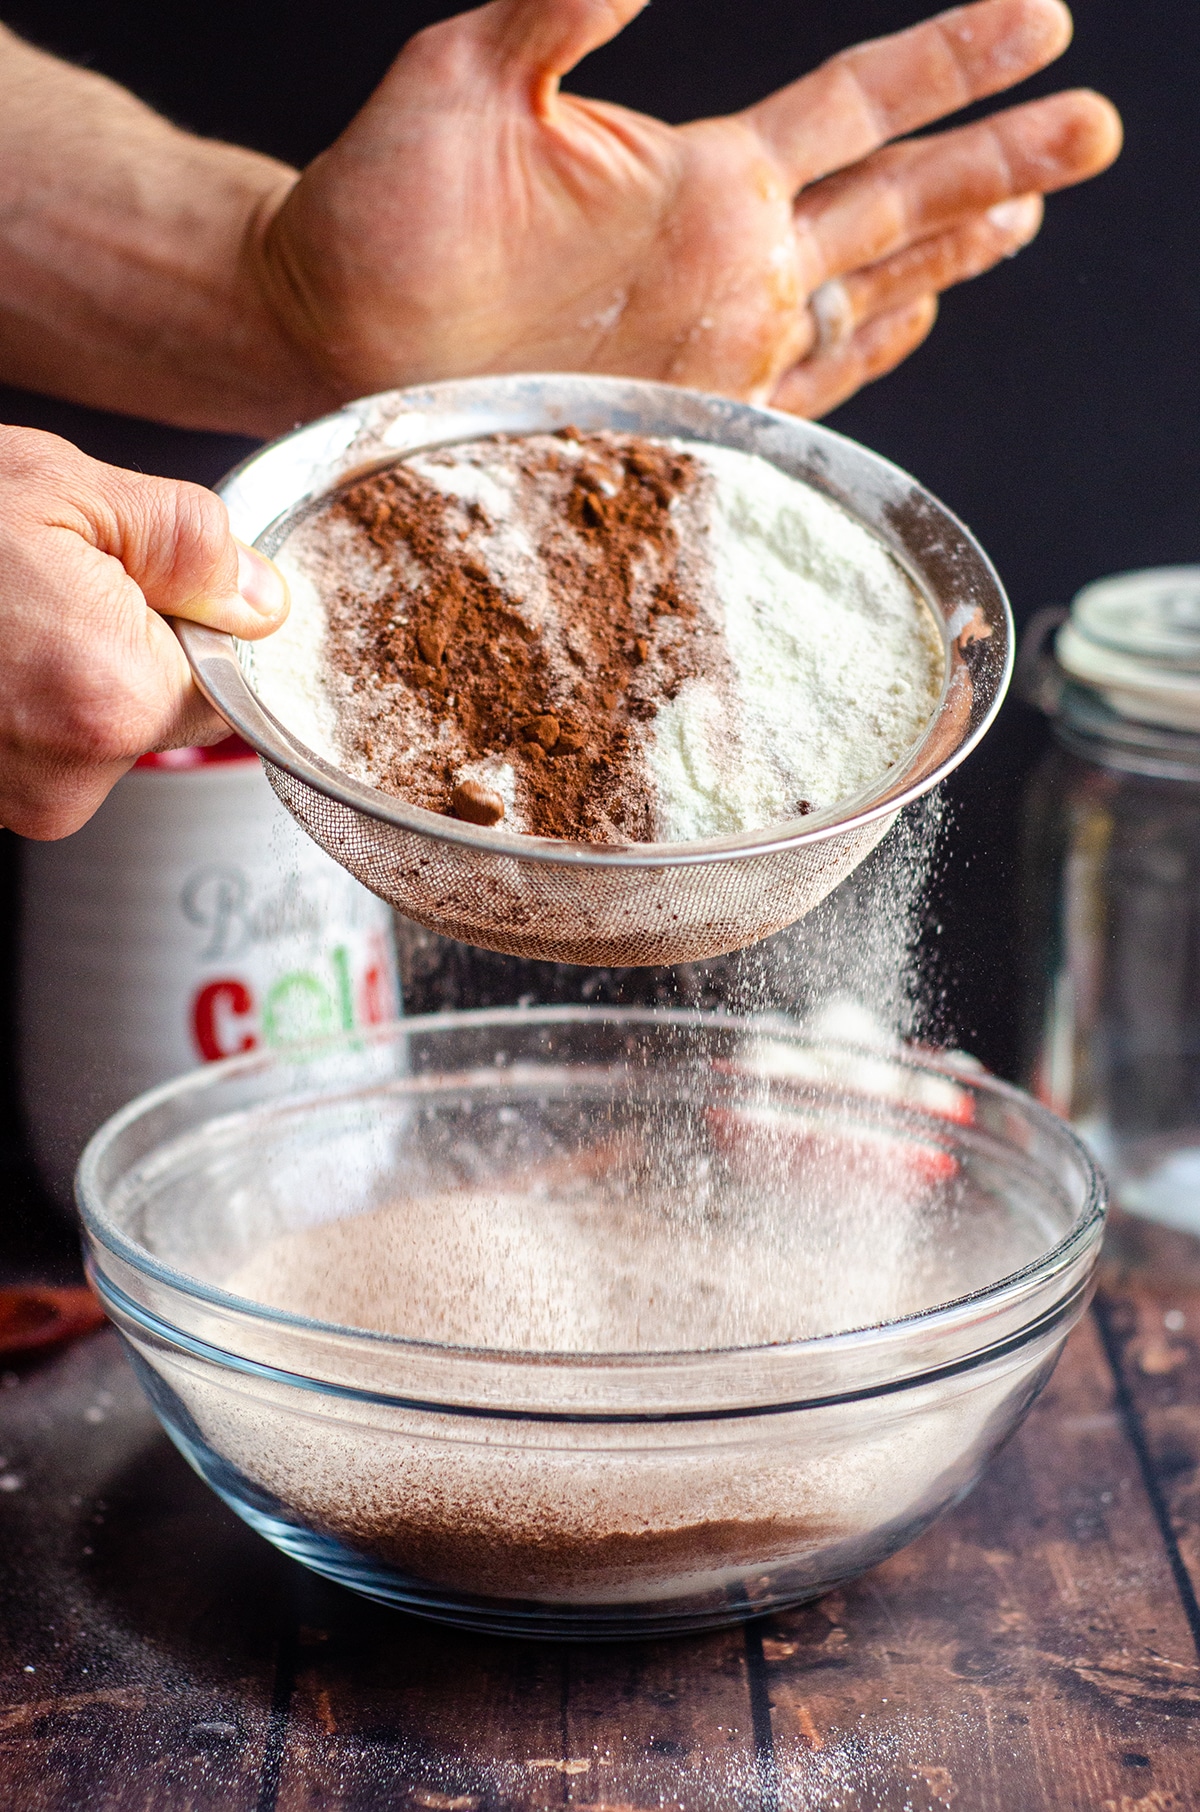 sifting powdered sugar and cocoa powder into a bowl for homemade hot cocoa mix